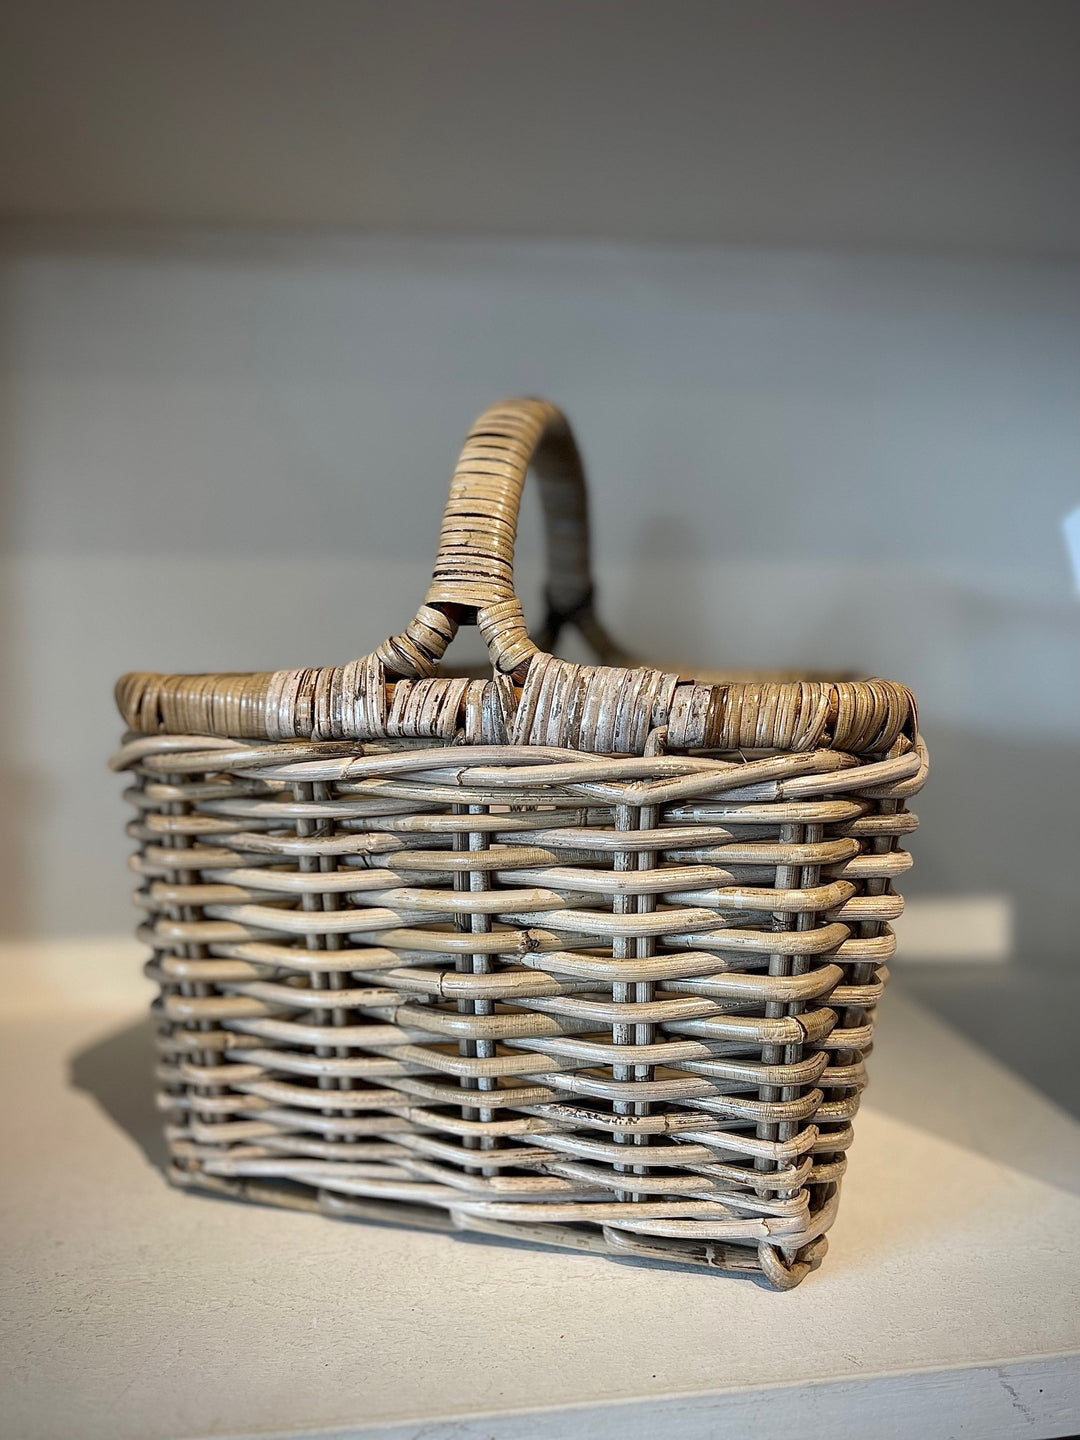 Applewood Basket